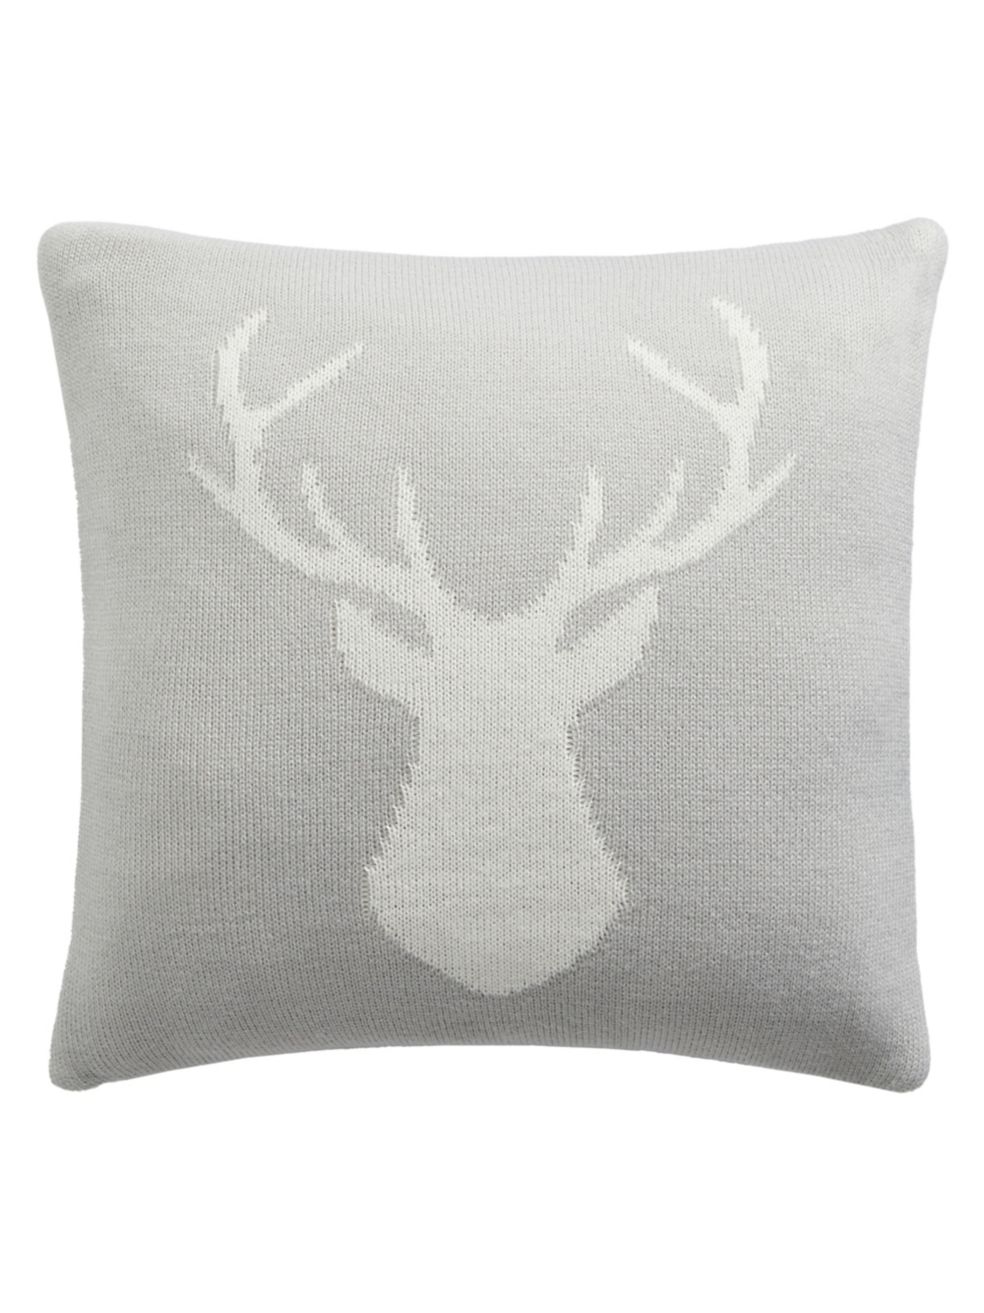 GlucksteinHome Knit Reindeer Cushion